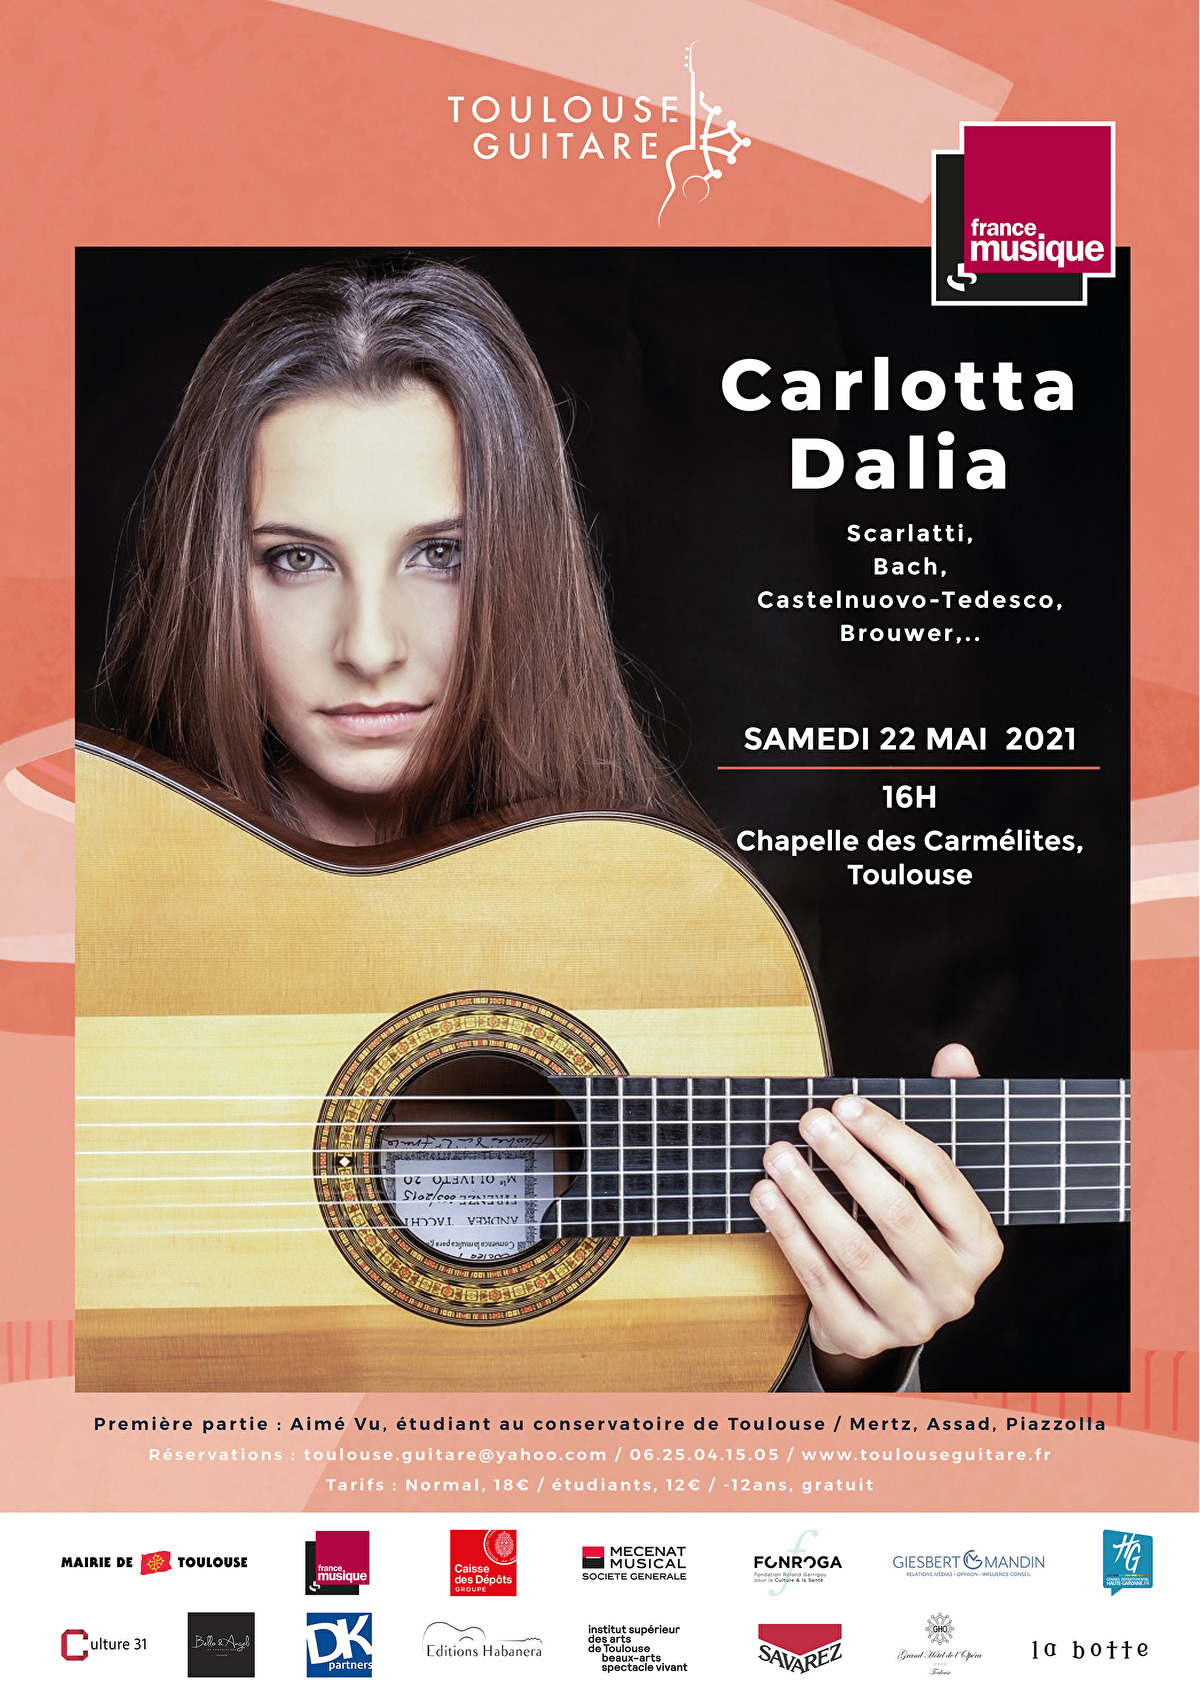 Carlotta Dalia